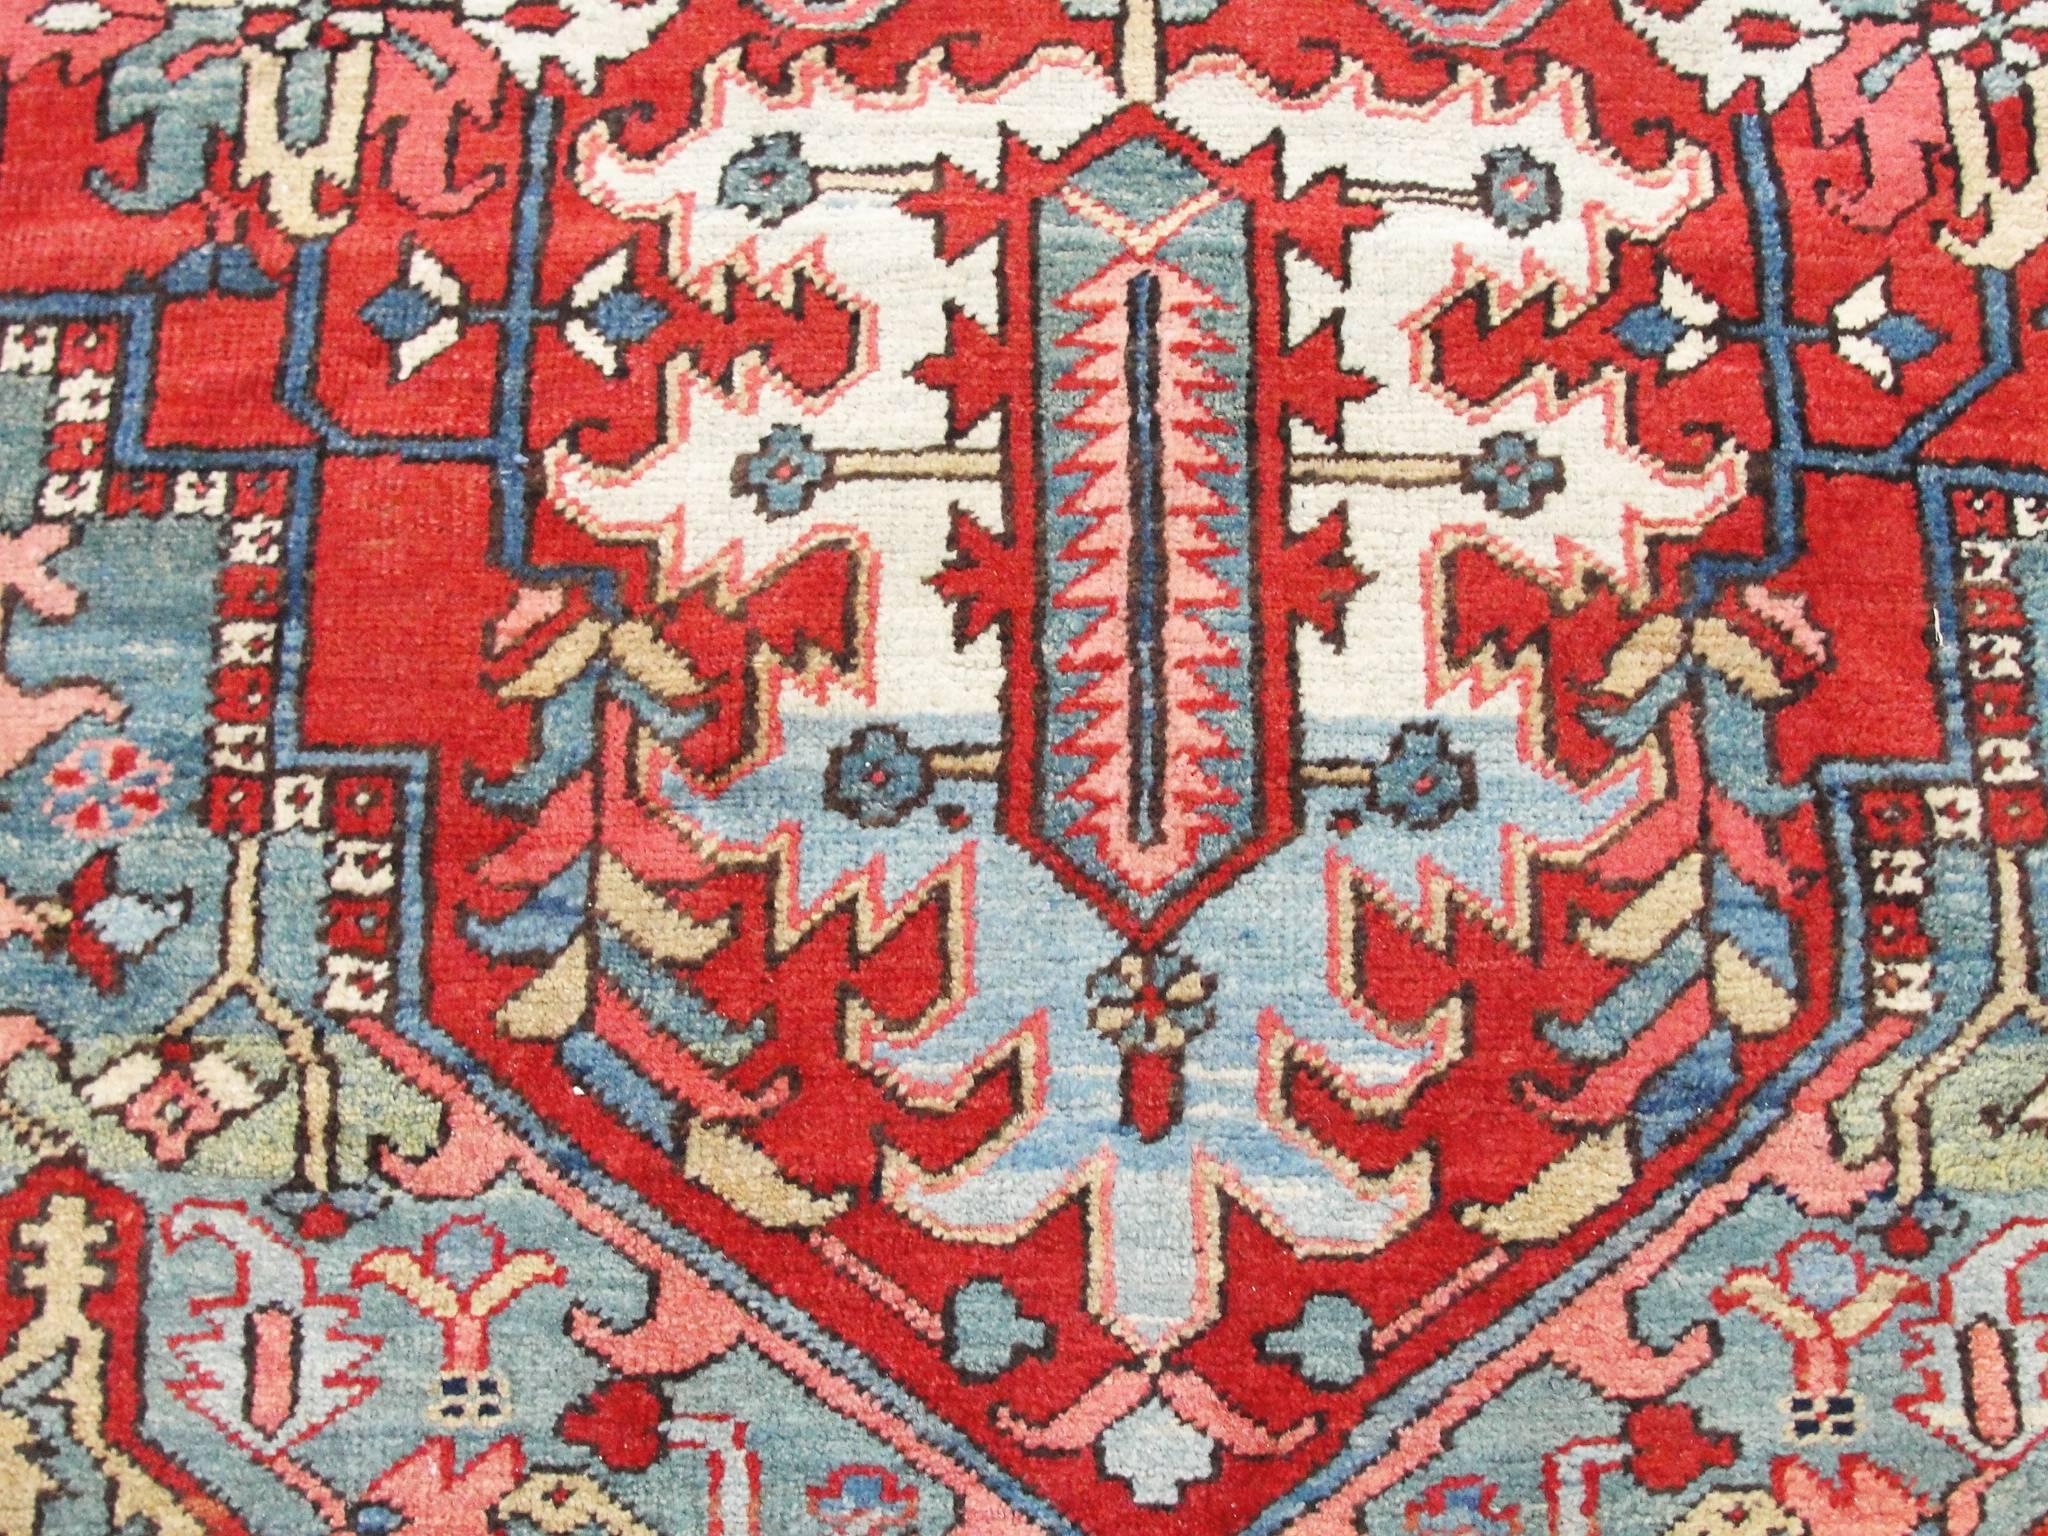  Antique Persian Heriz/Serapi Carpet, Charming, 9' x 12'7